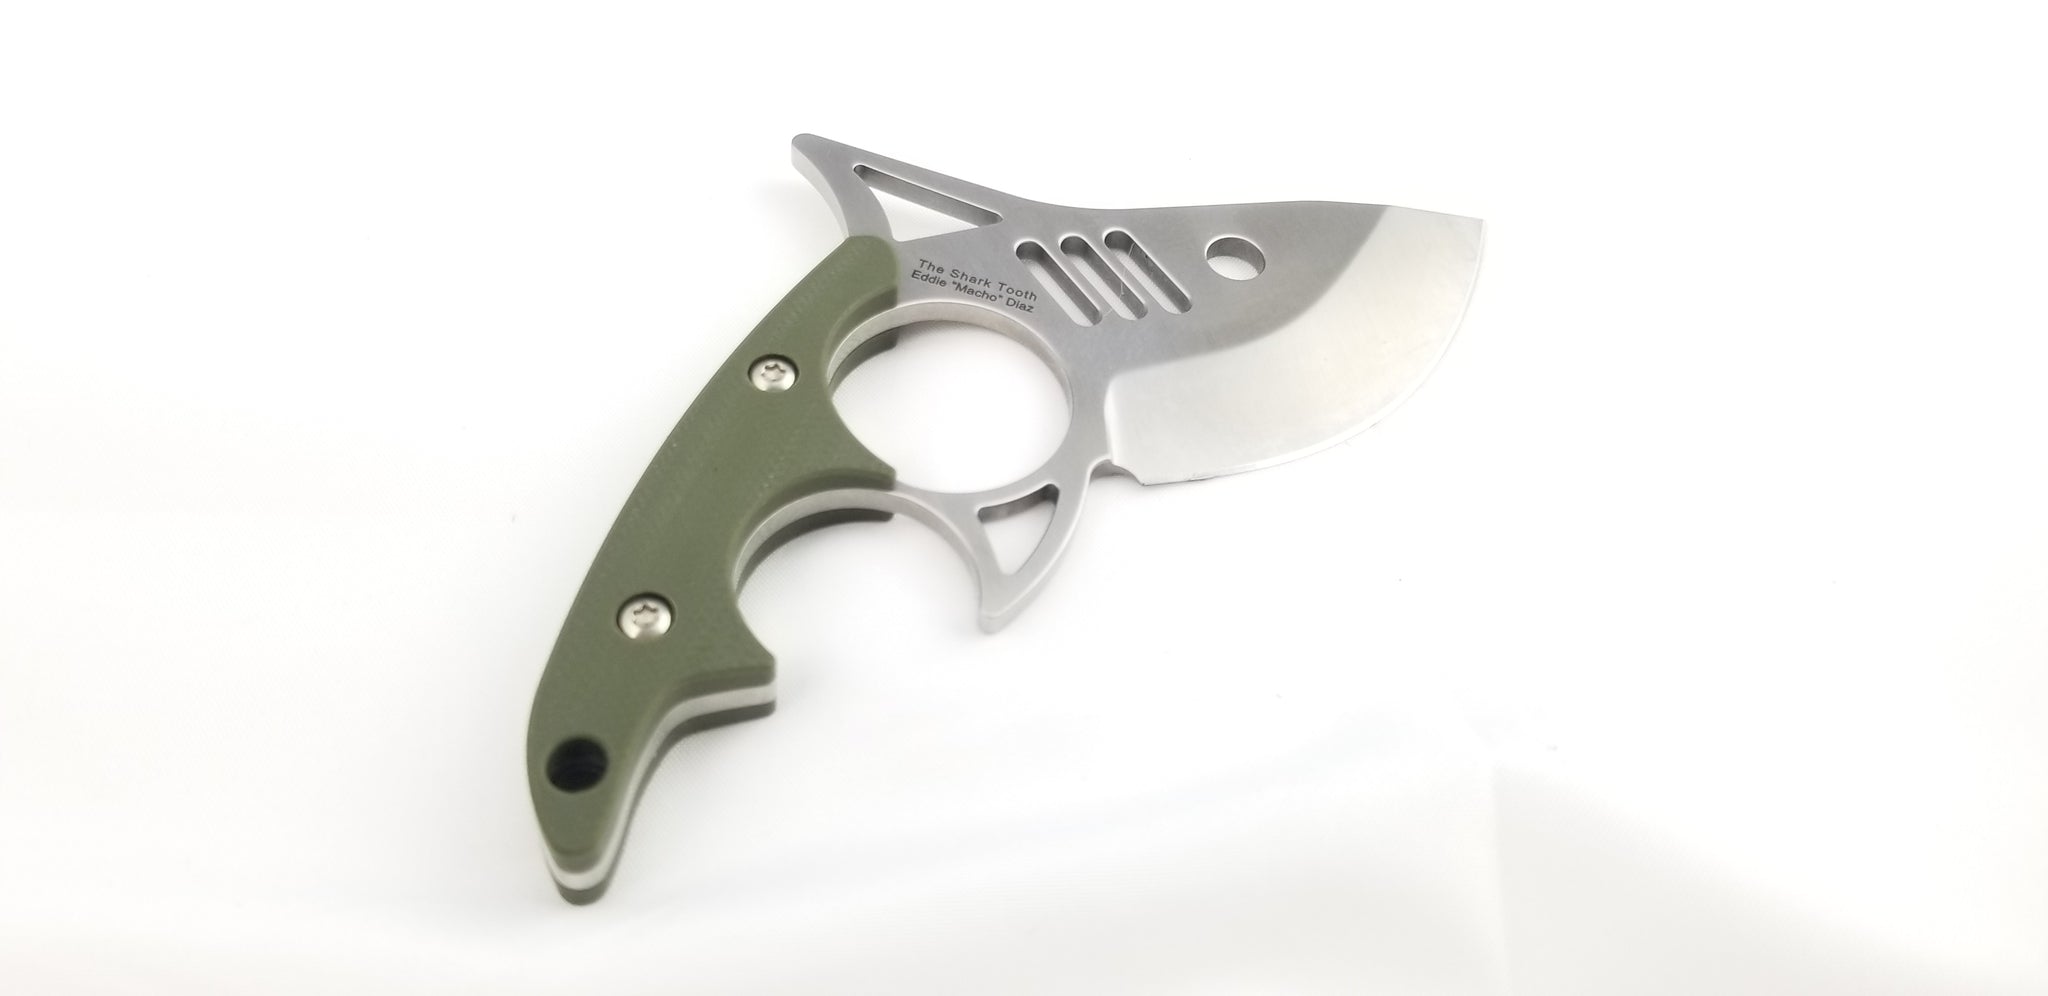 Kizer Cutlery 1043N1 Macho Blades The Shark Tooth Fixed Blade Knife 2.8  N690 Satin Drop Point, Green G10 Handles, Kydex Pocket Sheath - KnifeCenter